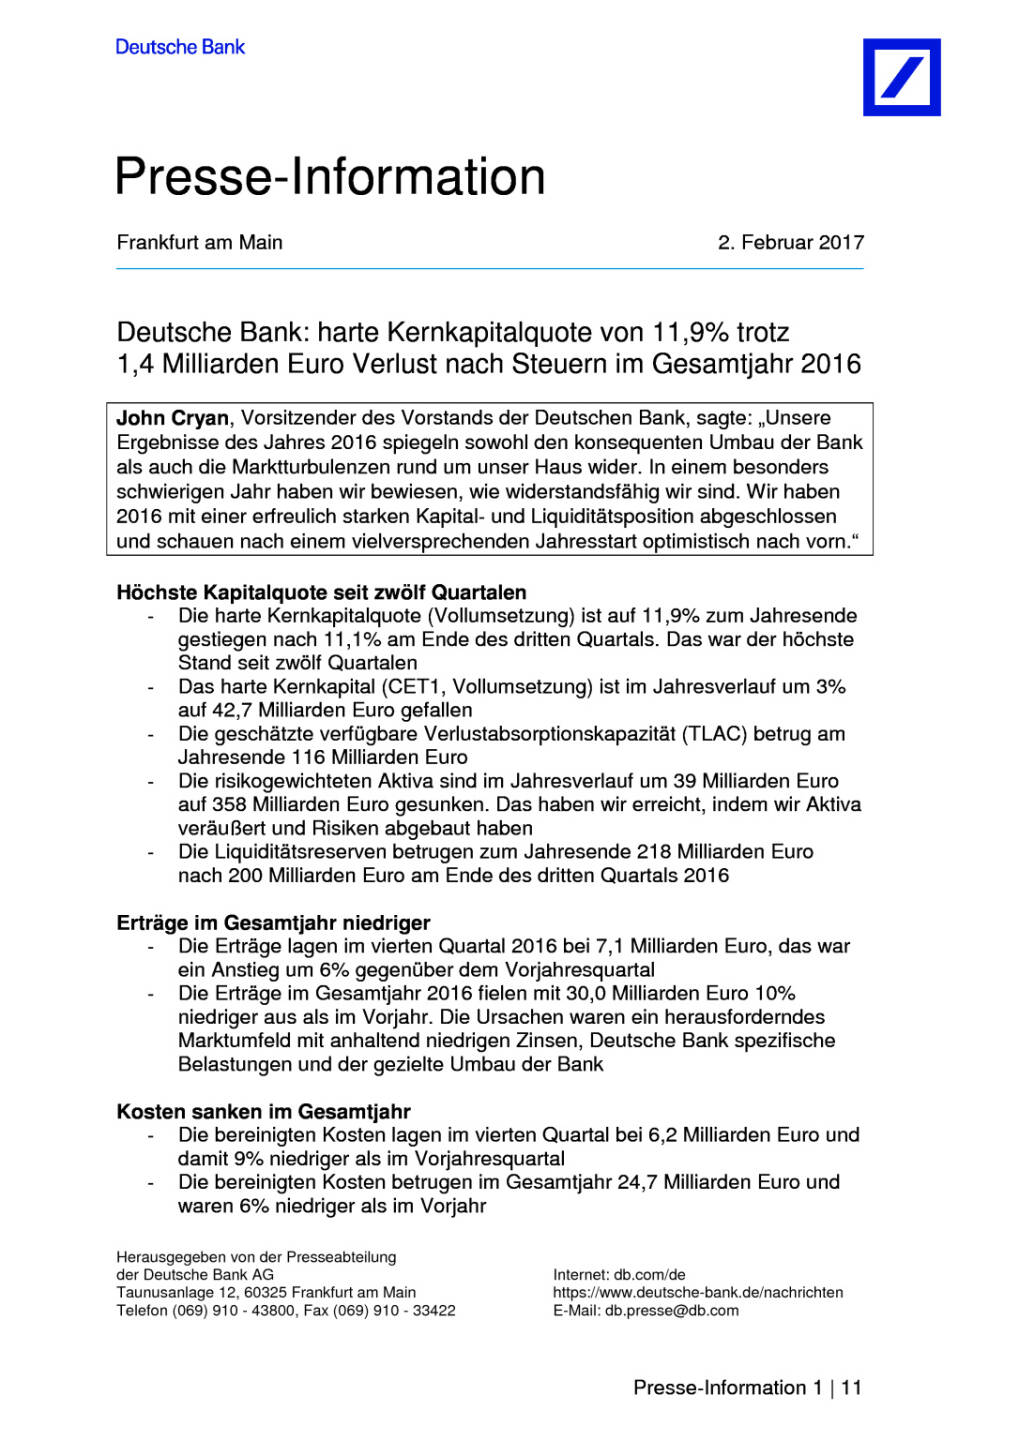 Deutsche Bank: 11,9 Prozent harte Kapitalquote trotz 1,4 Milliarden Euro Verlust, Seite 1/11, komplettes Dokument unter http://boerse-social.com/static/uploads/file_2090_deutsche_bank_119_prozent_harte_kapitalquote_trotz_14_milliarden_euro_verlust.pdf